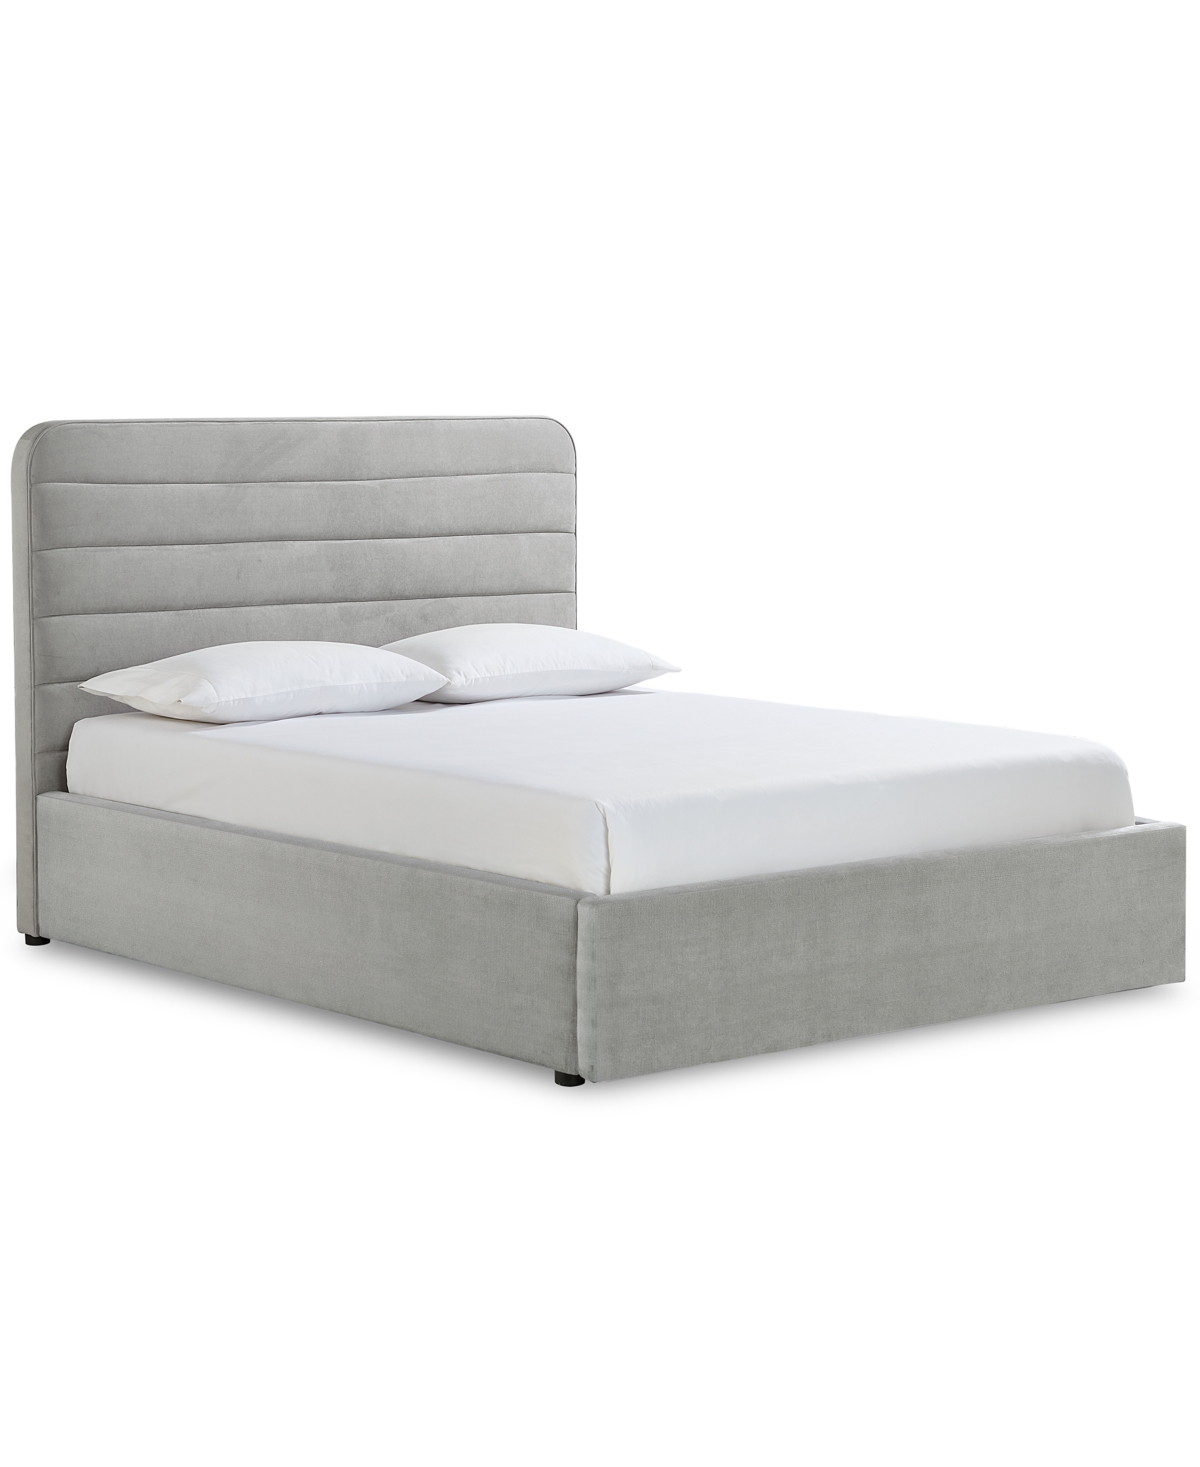 Furniture Haryan Queen Upholstered Storage Bed In Platinum